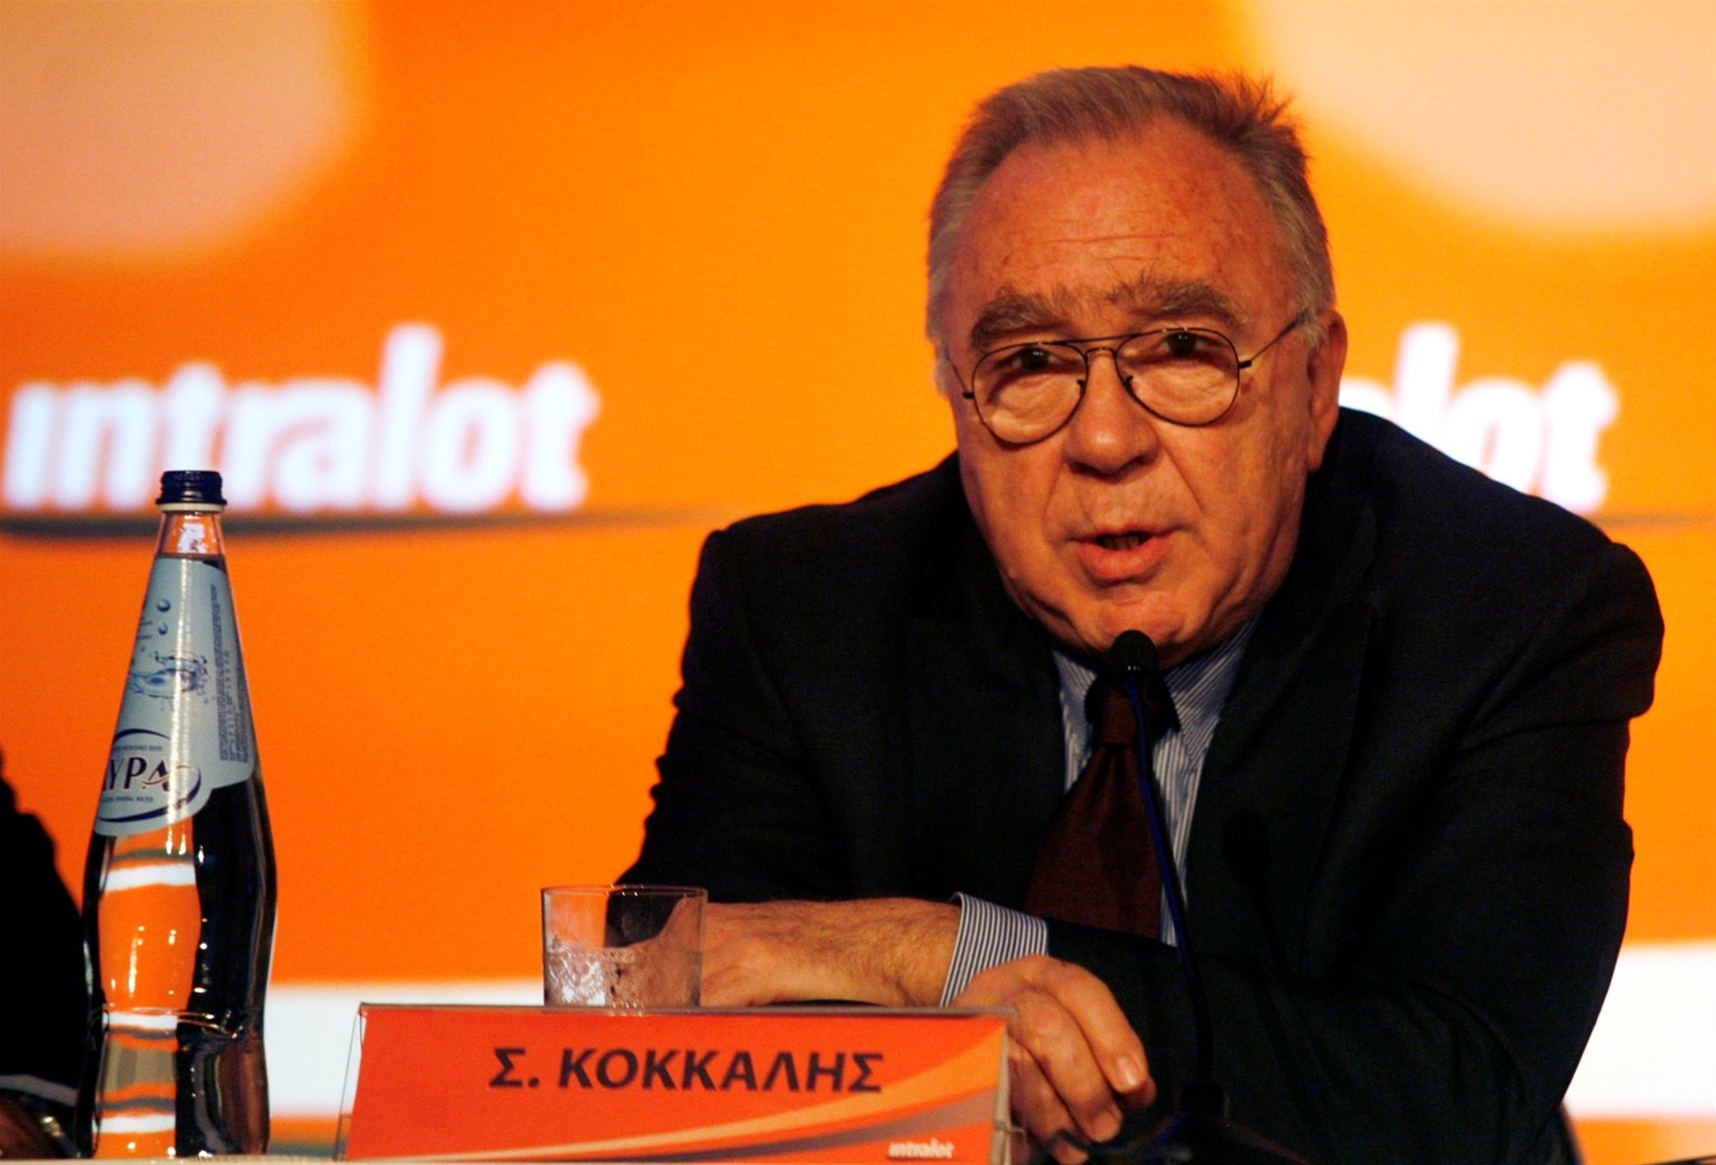 Intralot Chairman and CEO Sokratis P. Kokkalis